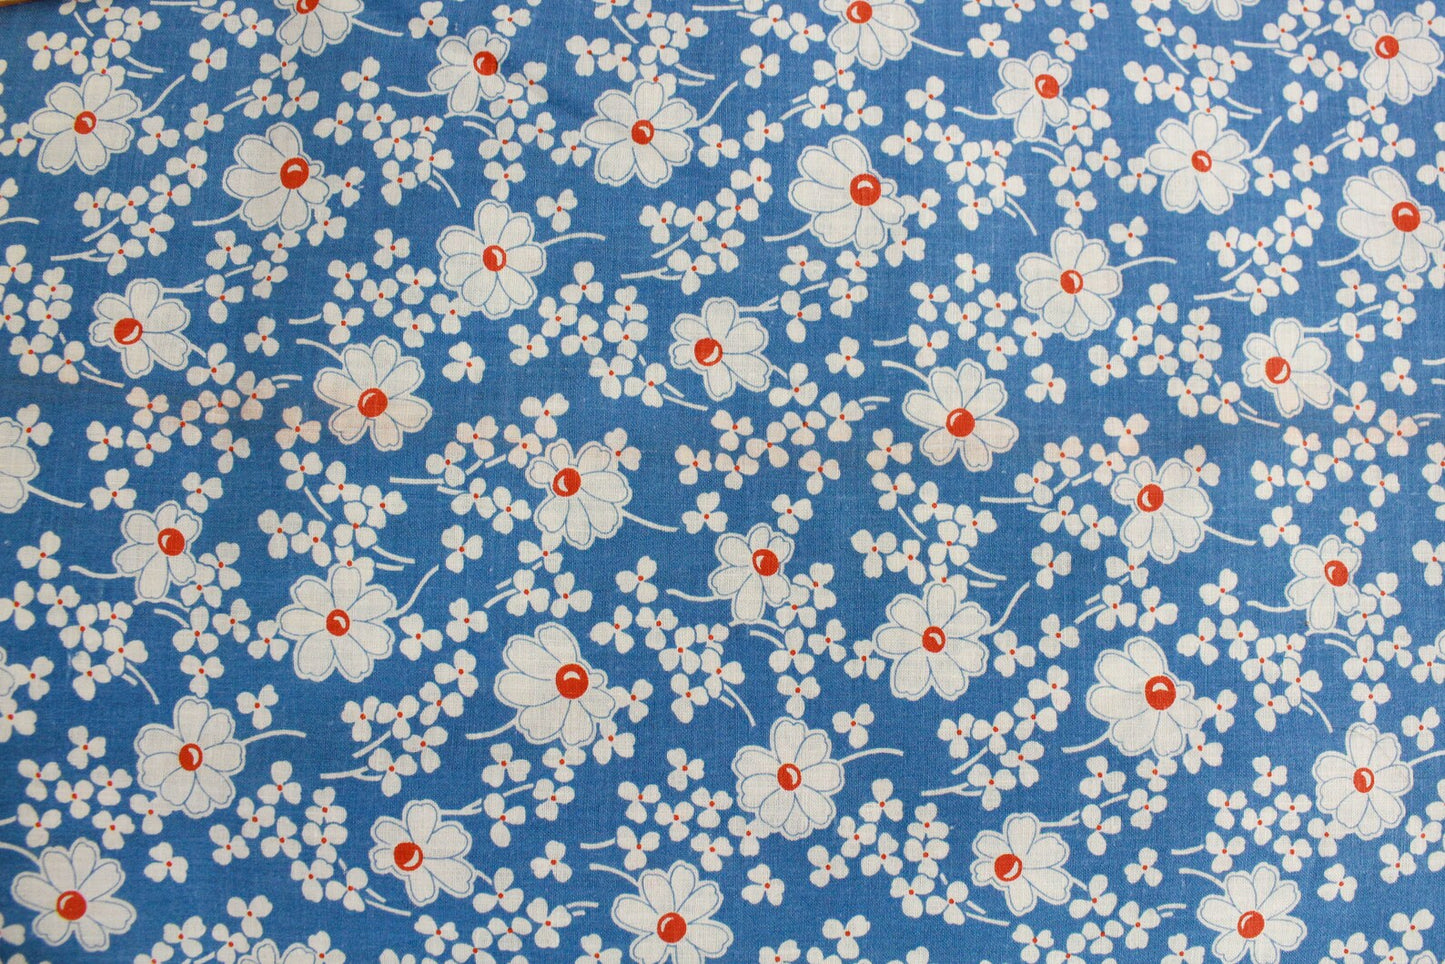 Vintage 1930s Blue & White Calico Floral Print Cotton Fabric, 10+ Yards